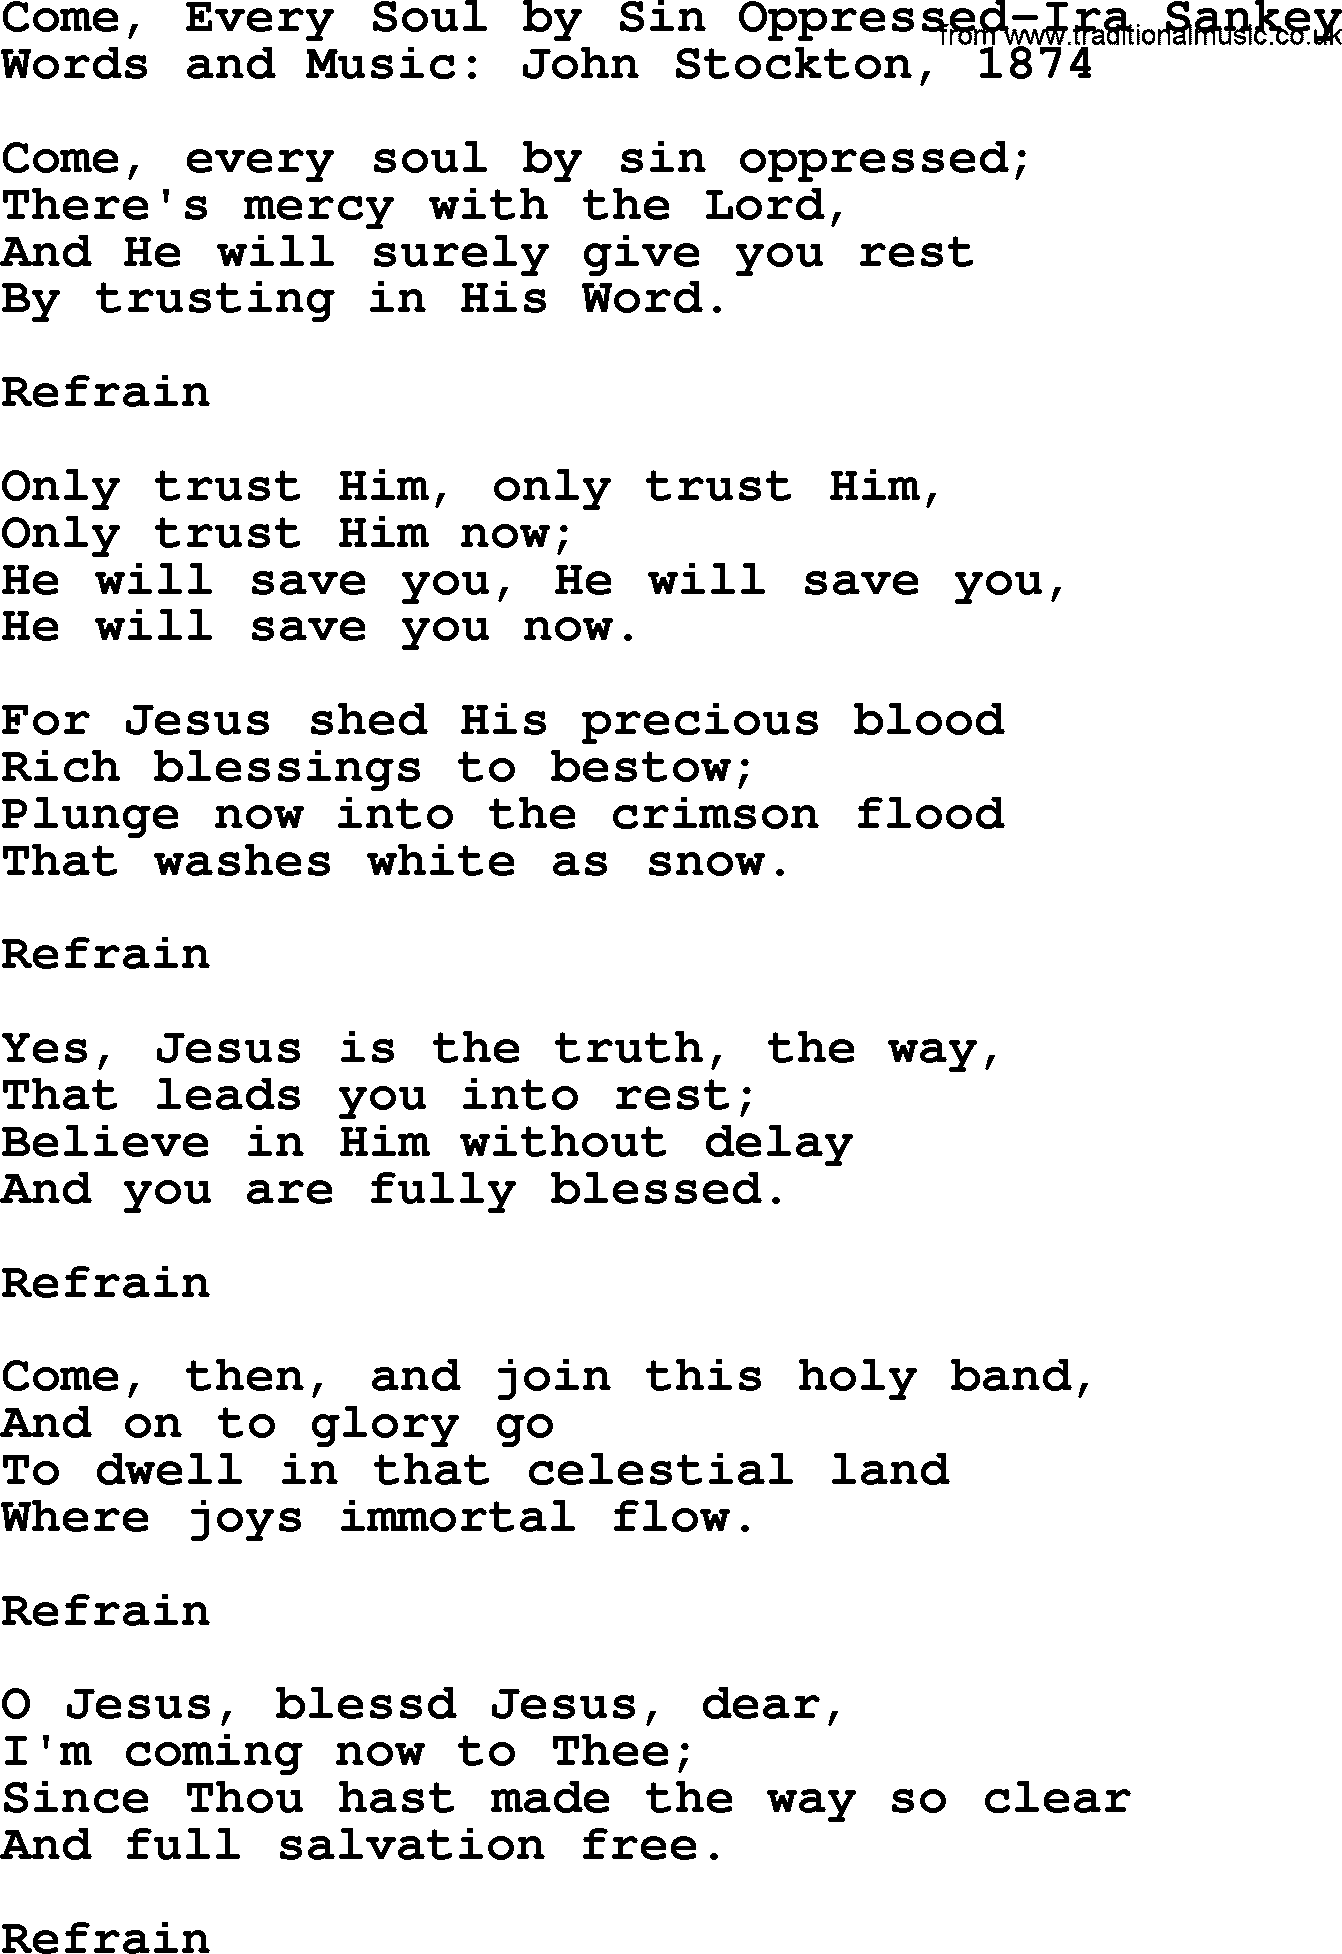 Ira Sankey hymn: Come, Every Soul by Sin Oppressed-Ira Sankey, lyrics